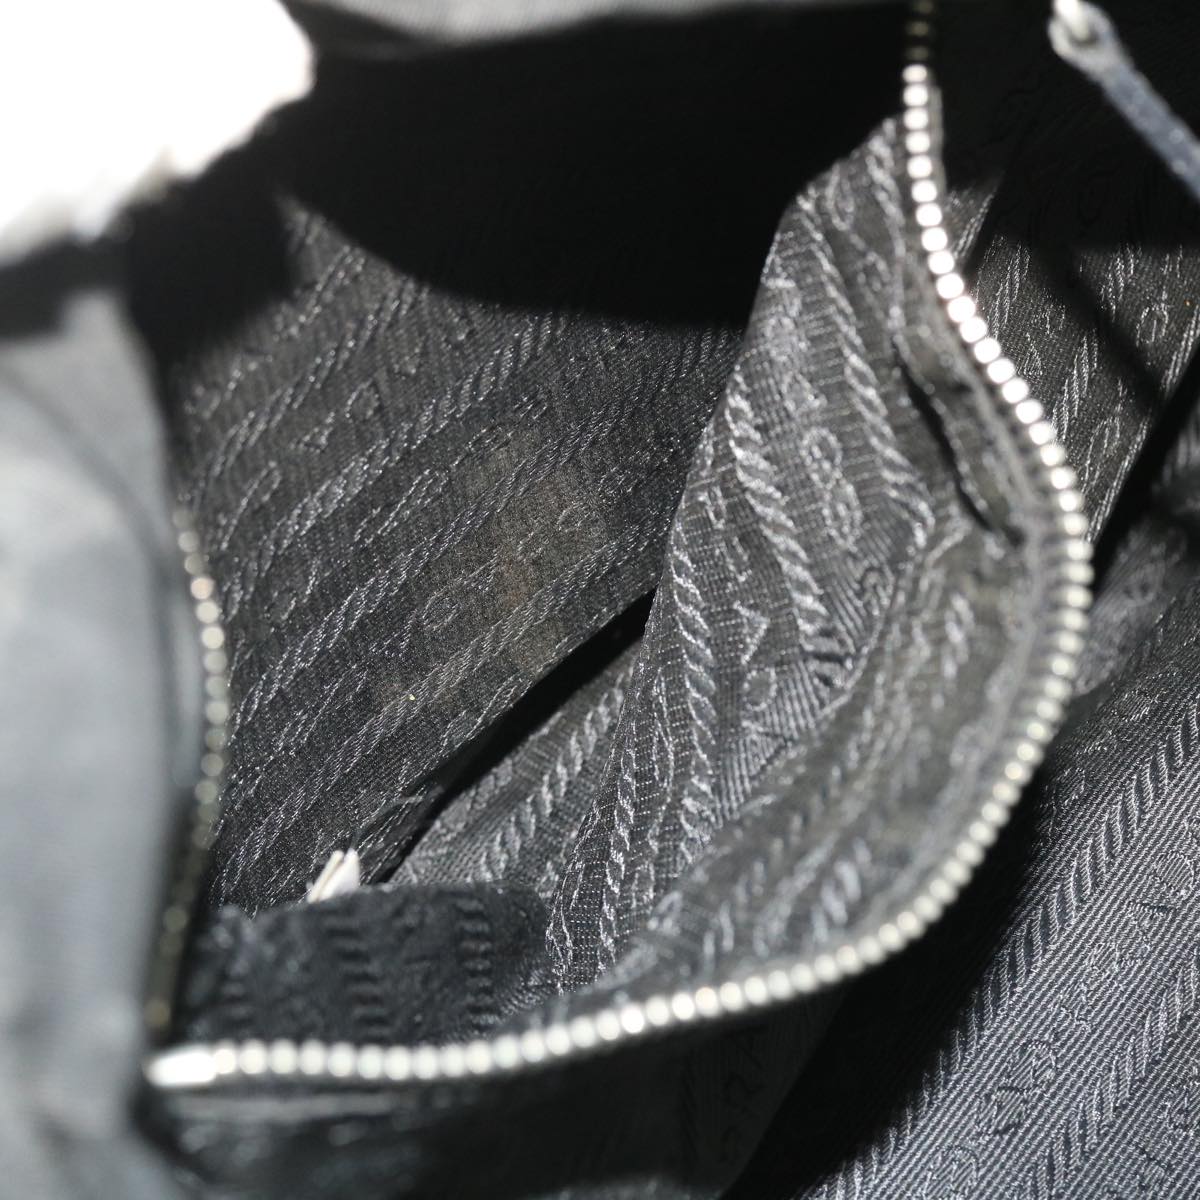 PRADA Hand Bag Nylon Black Auth bs8102